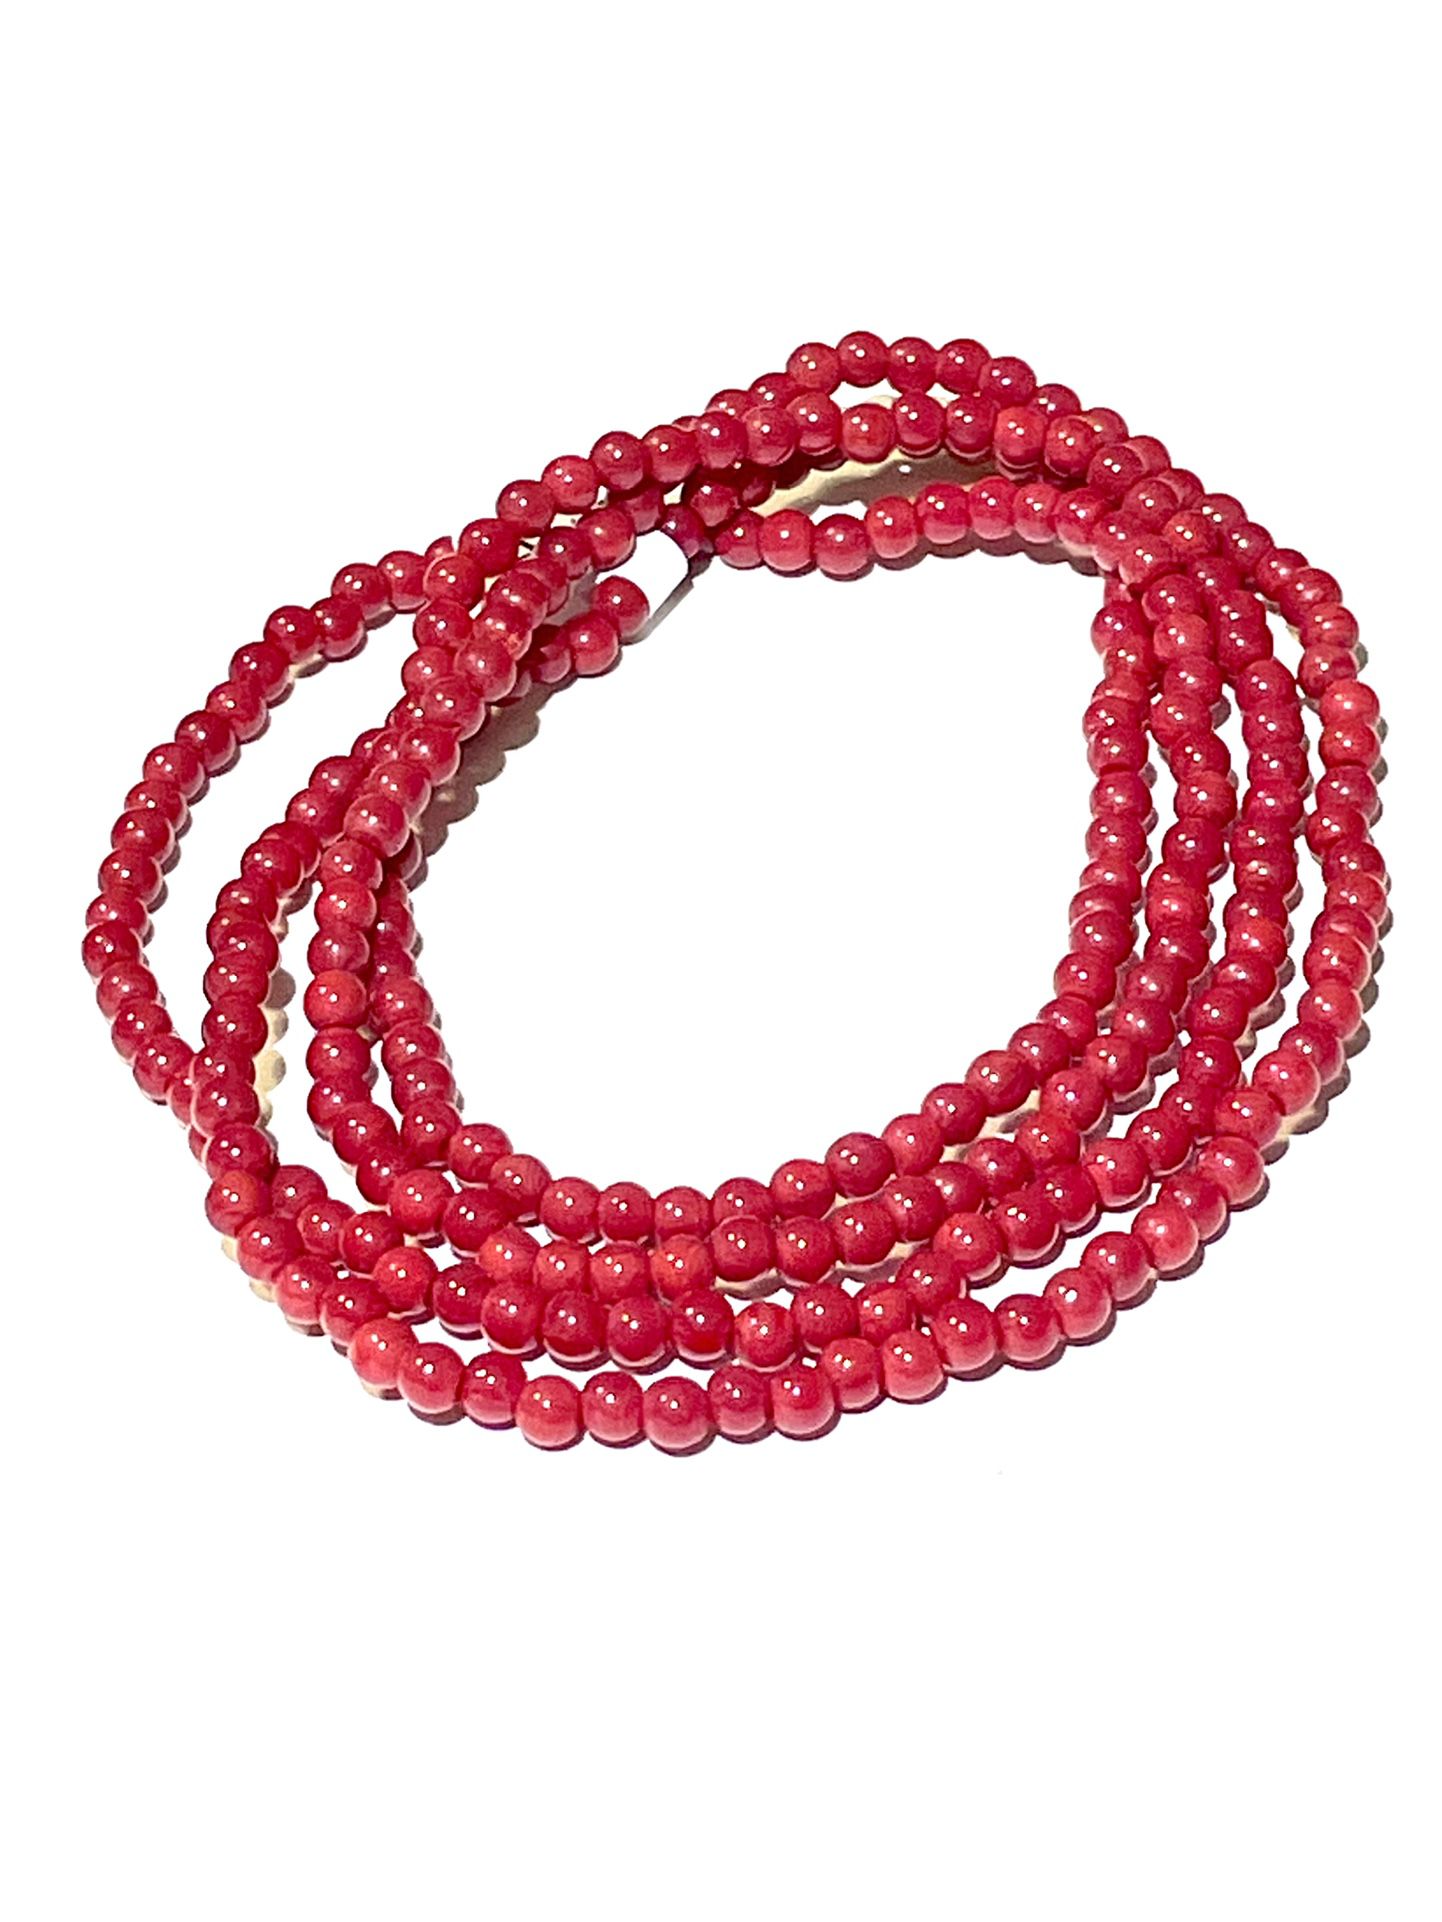 16 Inch Red Gemstone Beads 